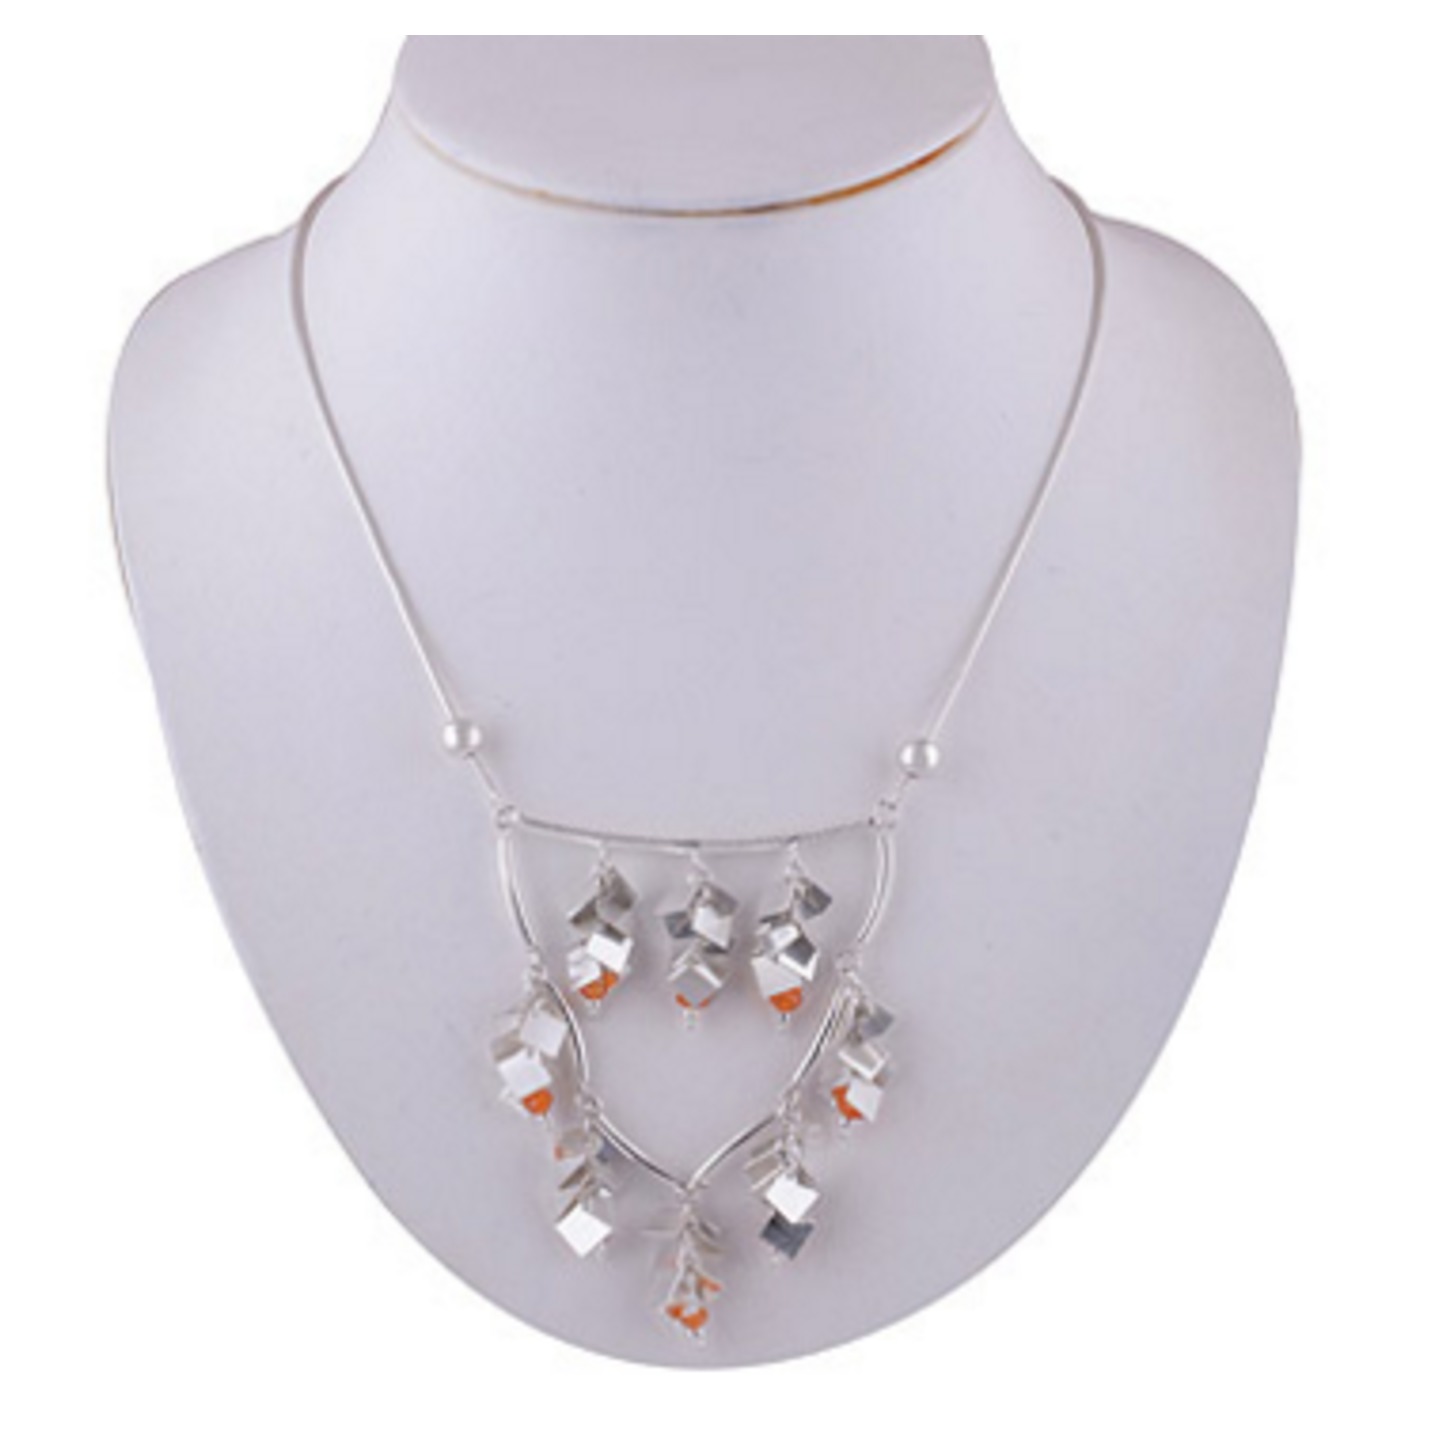 The Carnelian Silver Necklace